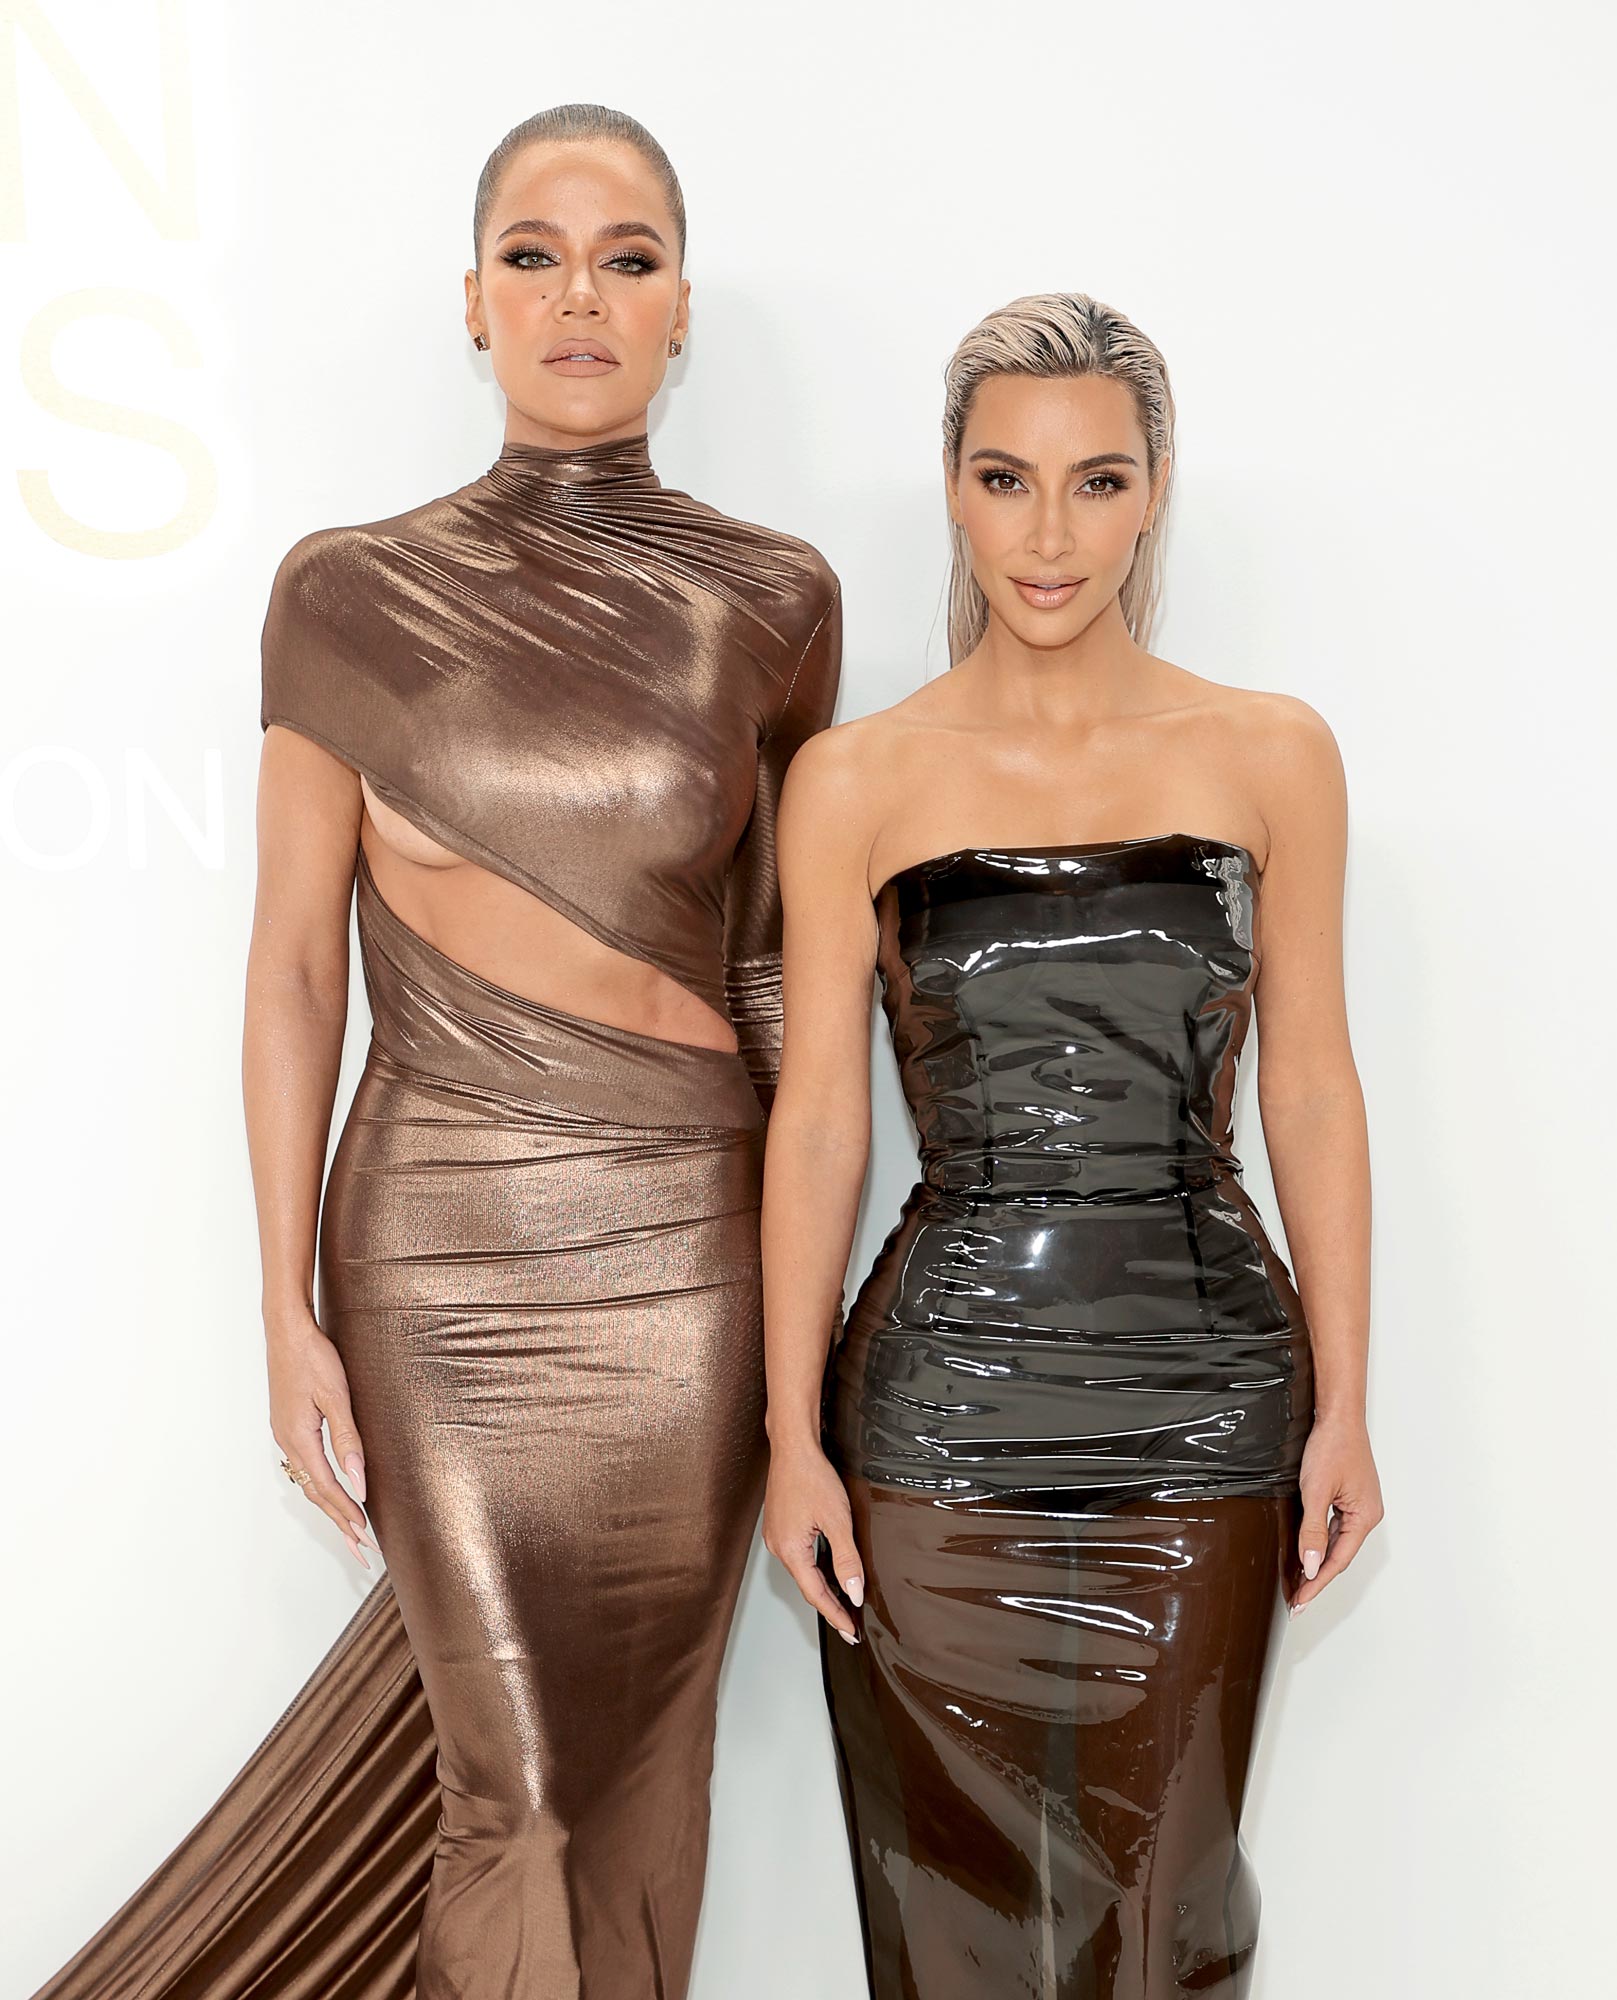 Kim Kardashian Has 'No Memory' of Flipping at Khloe Kardashain's Party